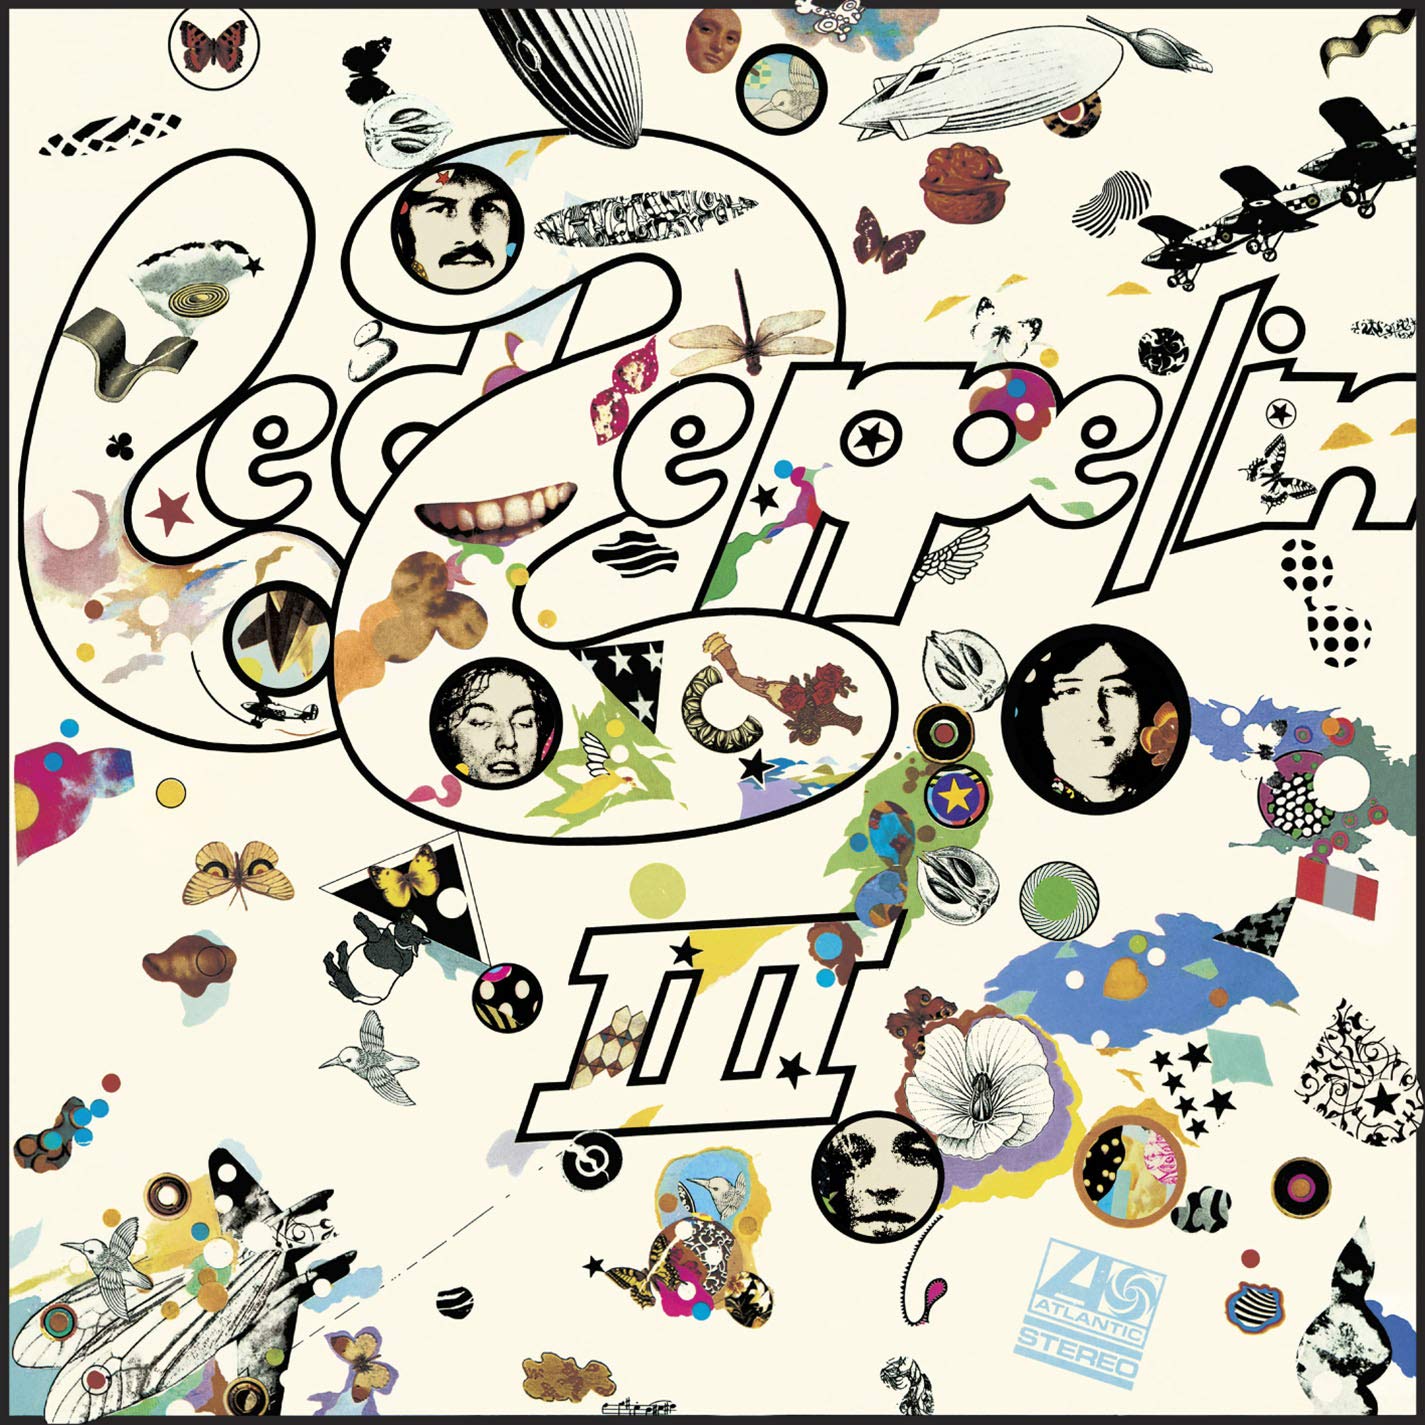 Led Zeppelin – Led Zeppelin III (Deluxe Edition Remastered Vinyl)